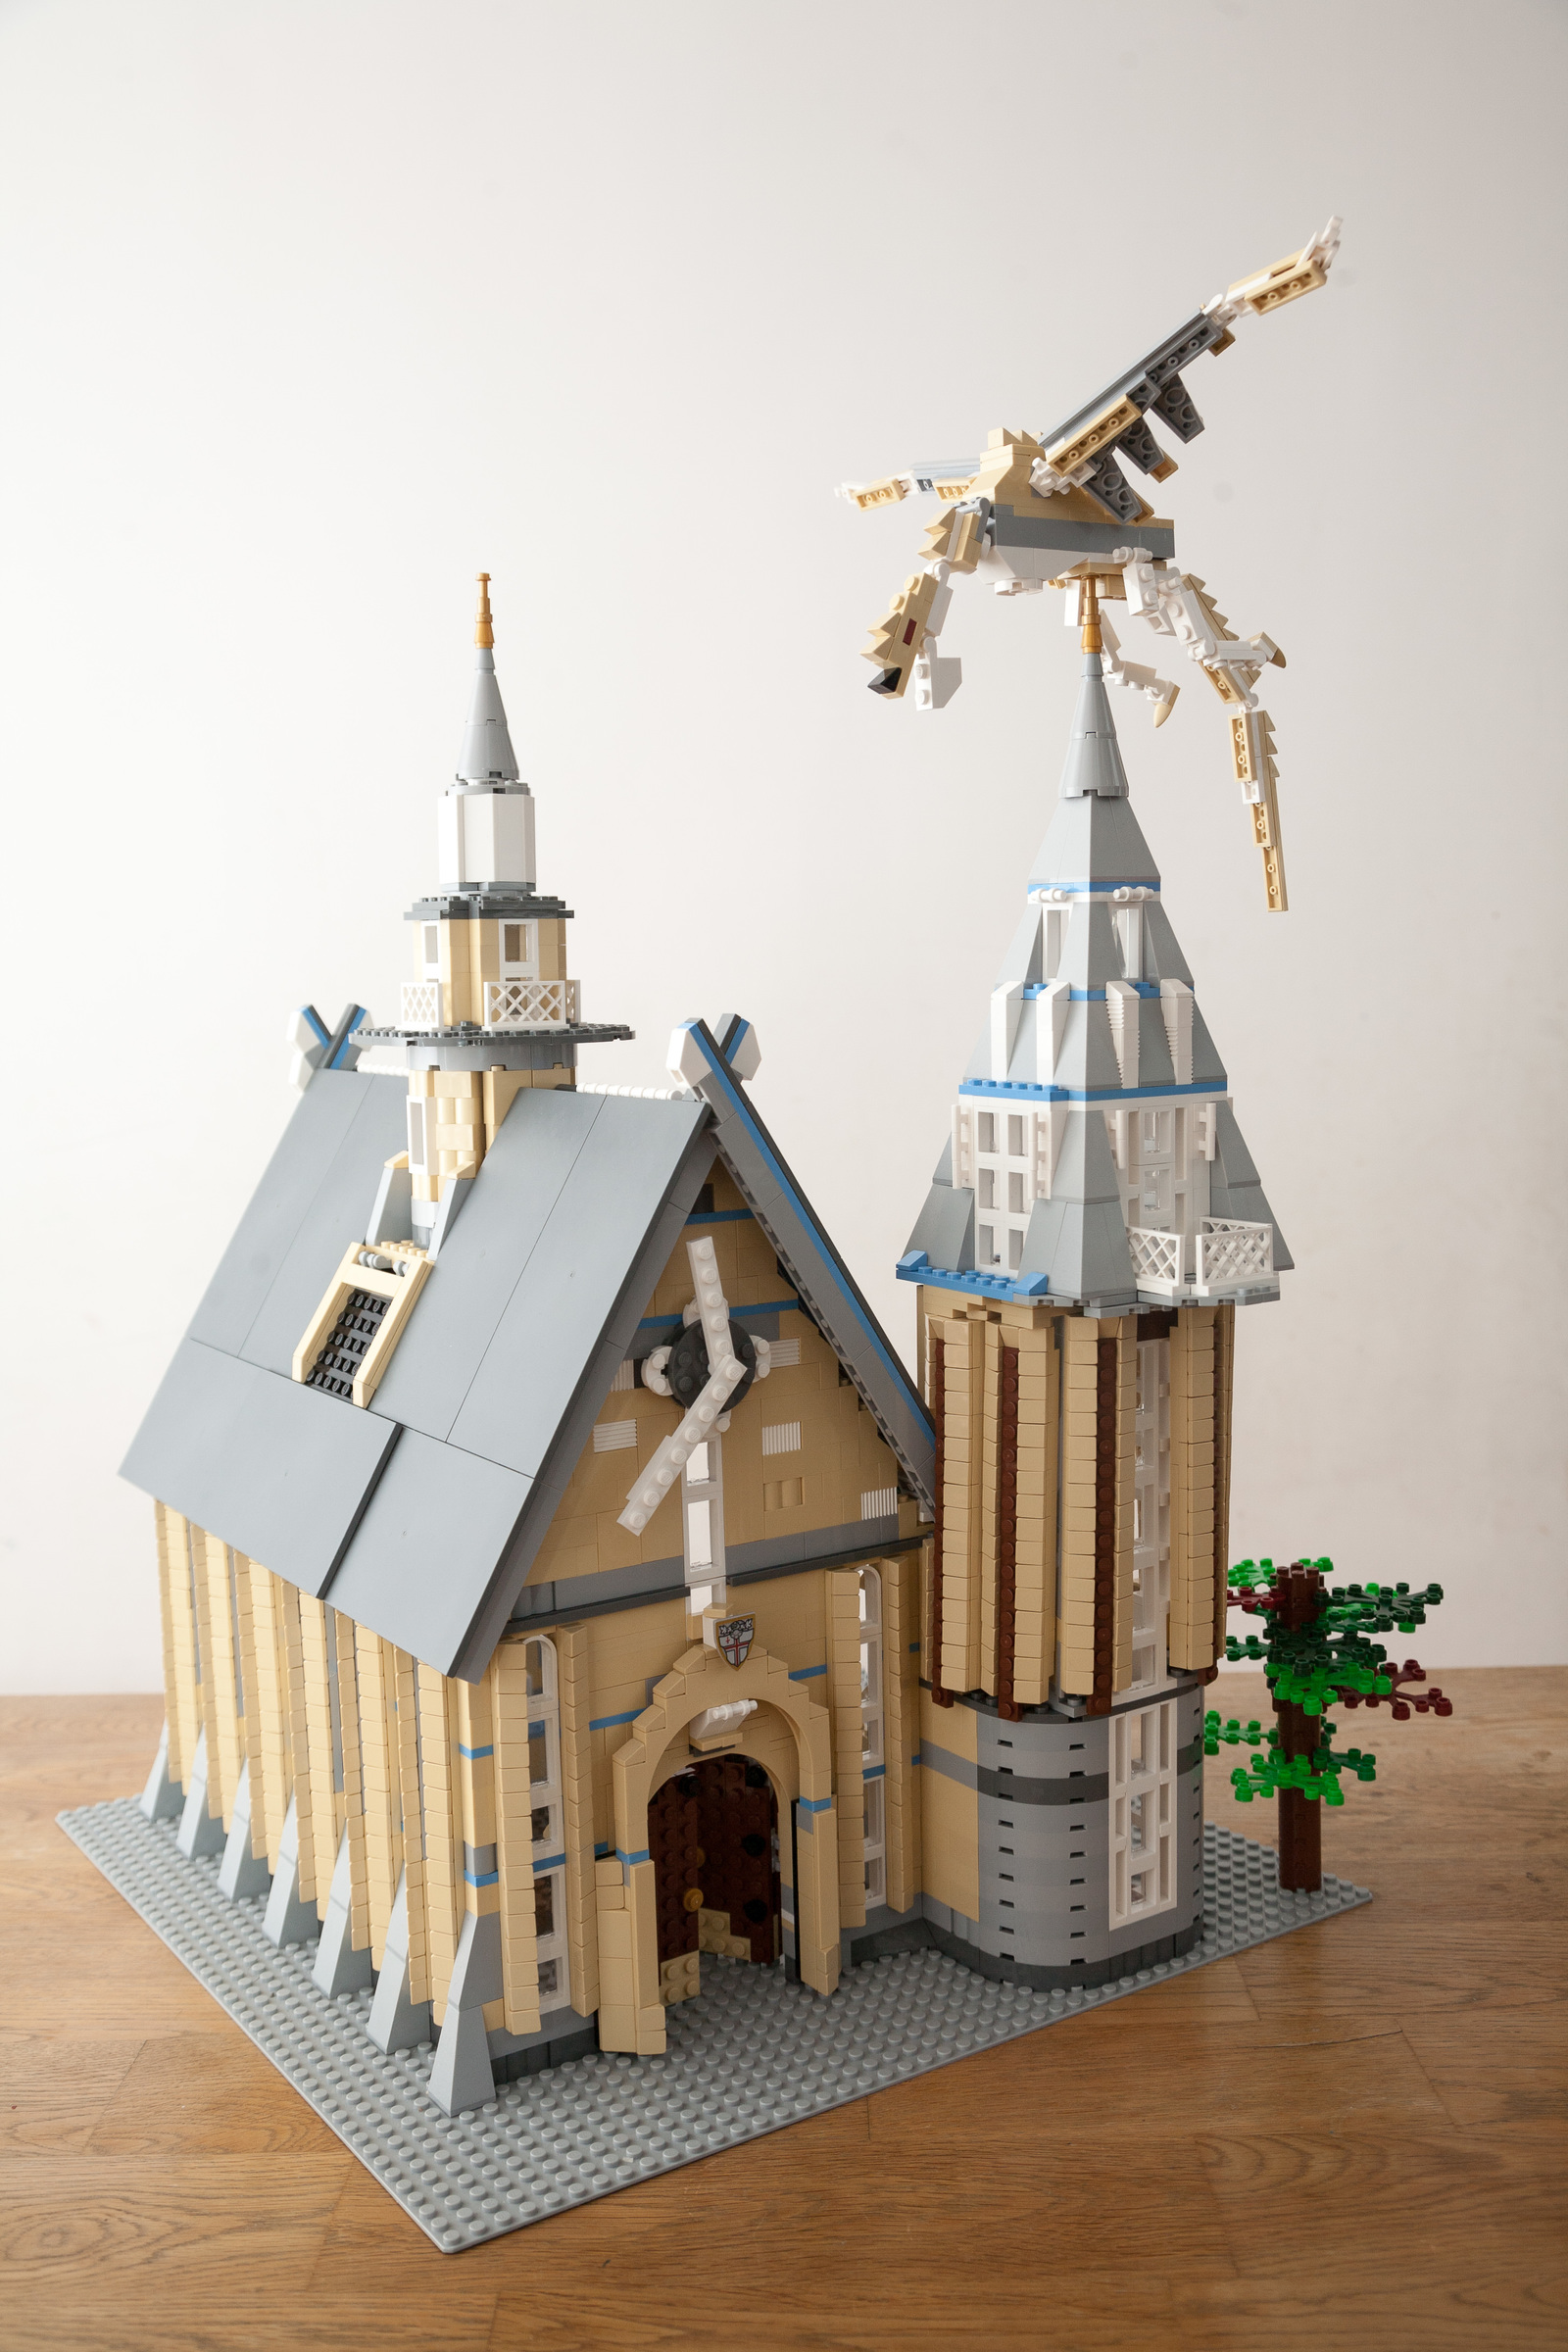 Children's fantasy - Lego, Tower Bridge, Hogwarts, Harry Potter, Reddit, Longpost, The photo